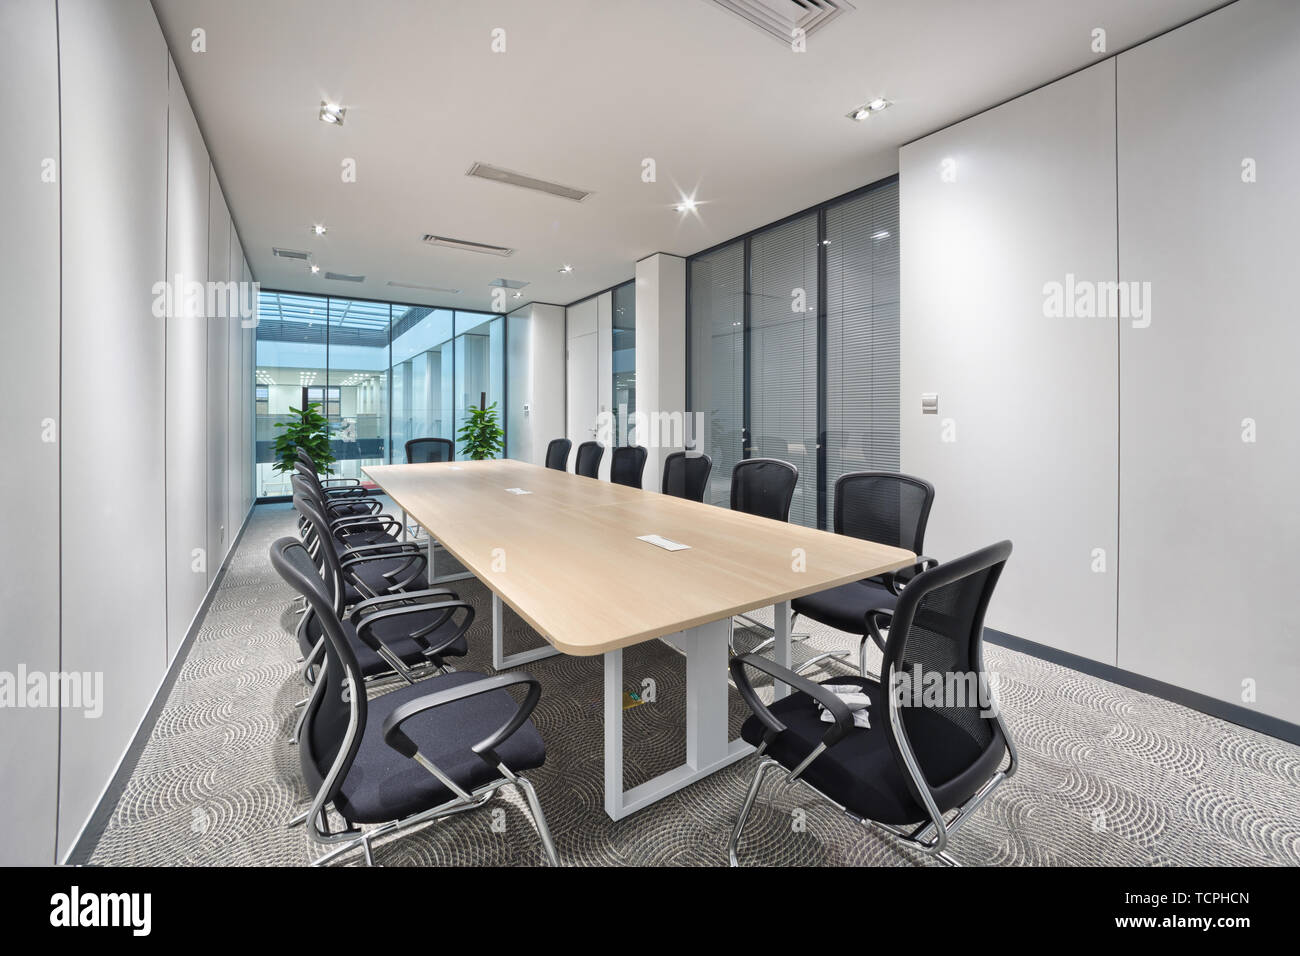 Modern Office Meeting Room Interior Stock Photo 248817653 Alamy